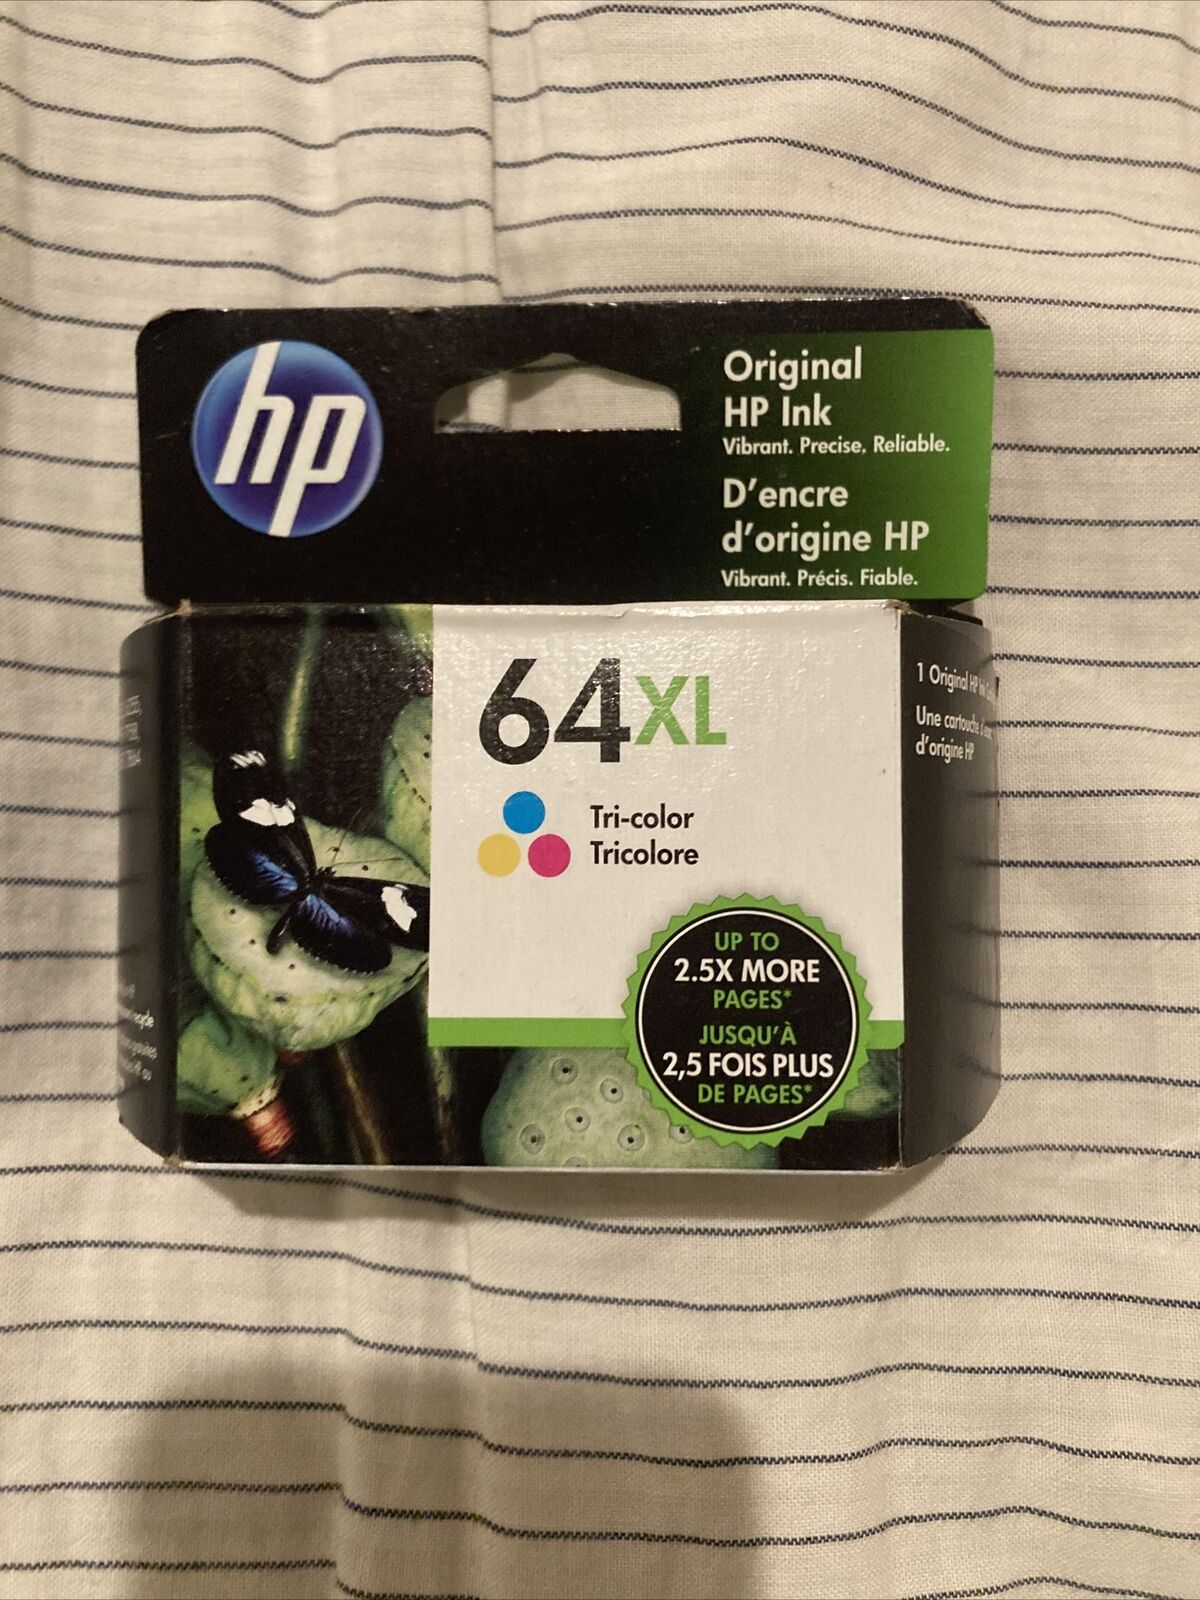 Sealed HP 64XL Tri Colors Ink Cartridges  EXP JUL 2023 - NEW SEALED